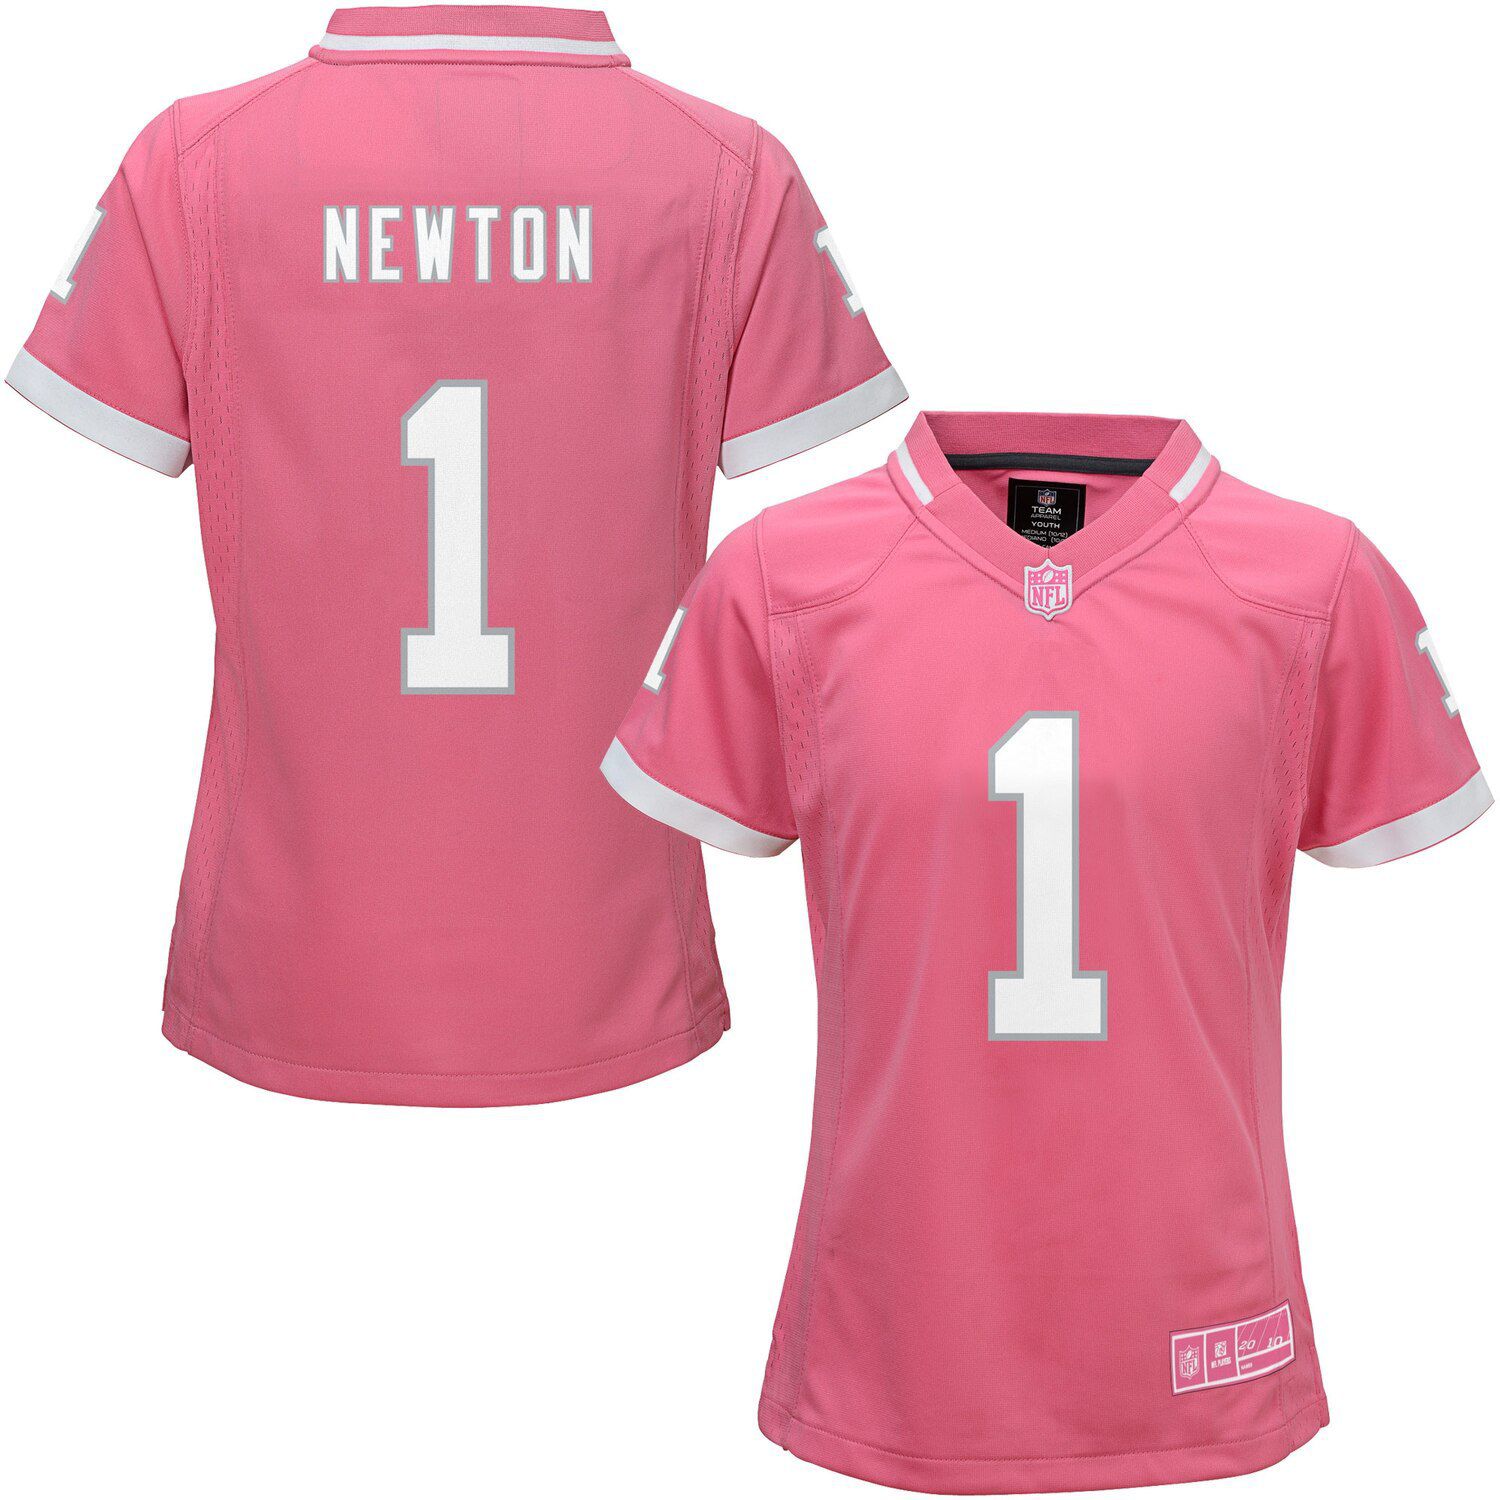 pink cam newton jersey